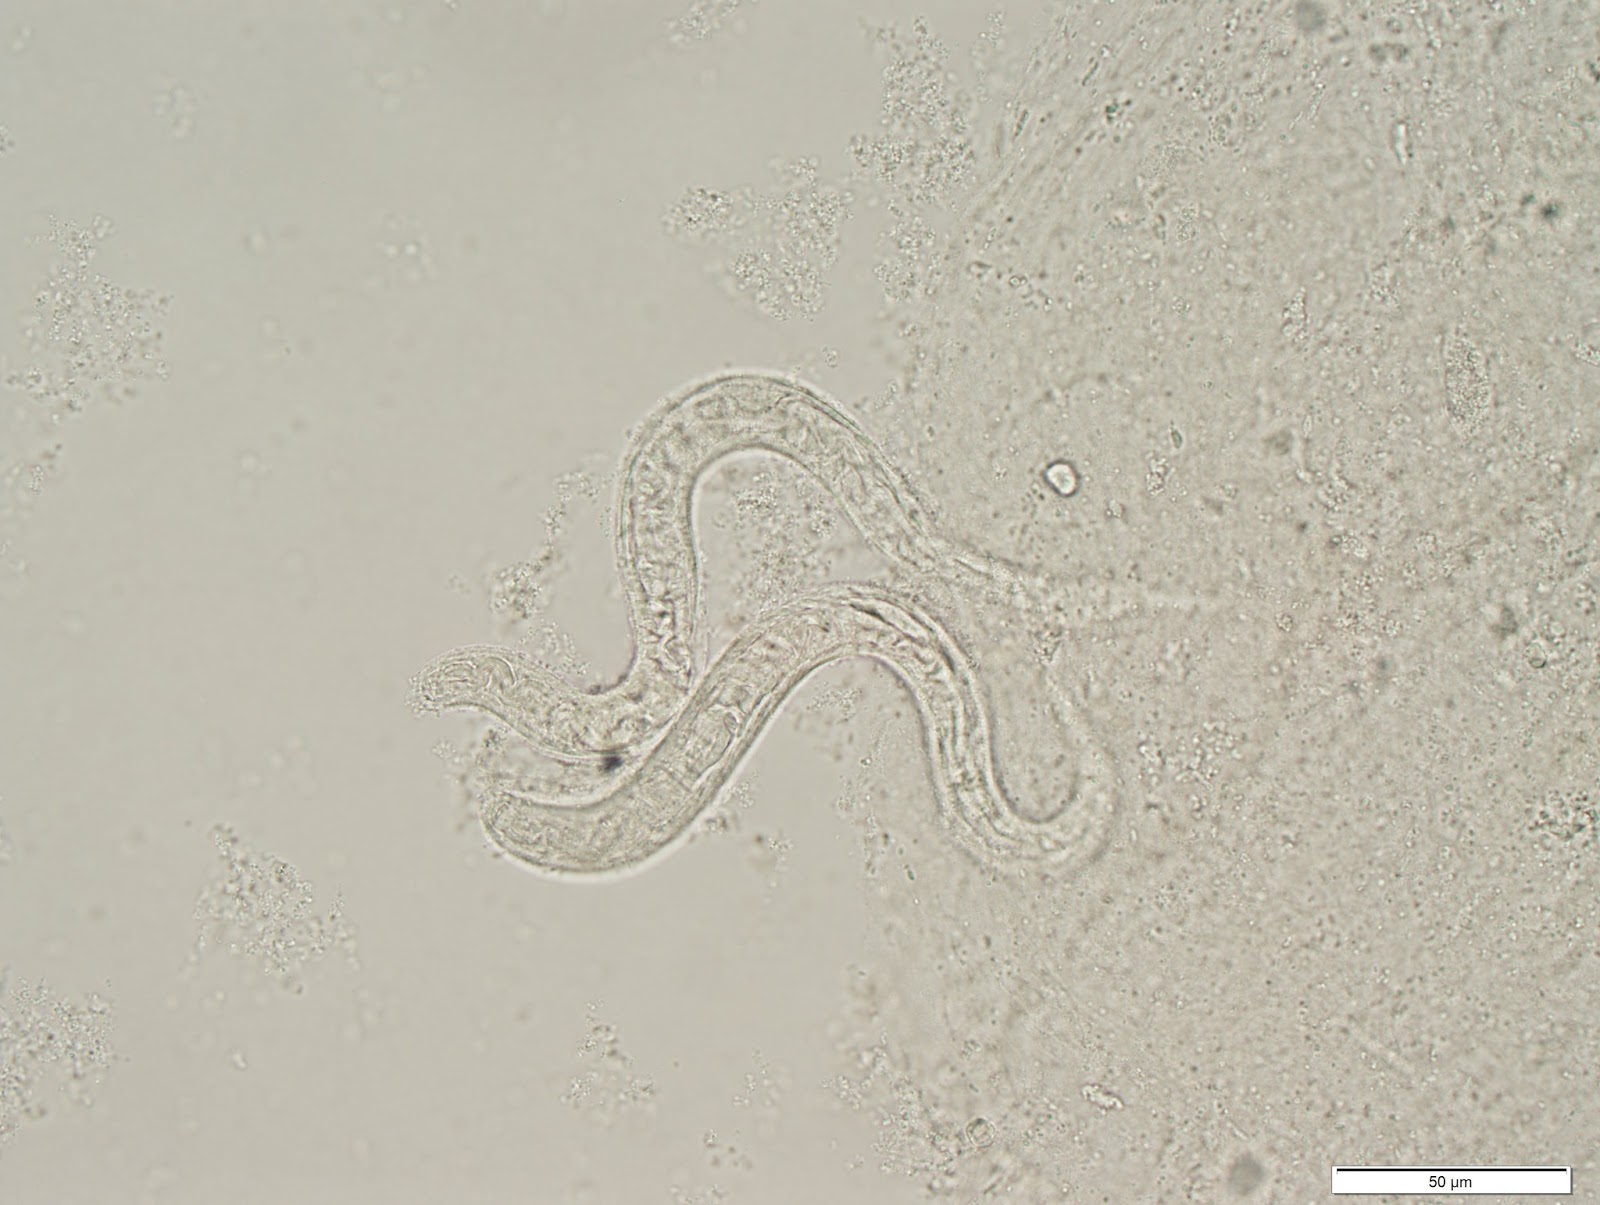 Creepy Dreadful Wonderful Parasites Case Of The Week 266